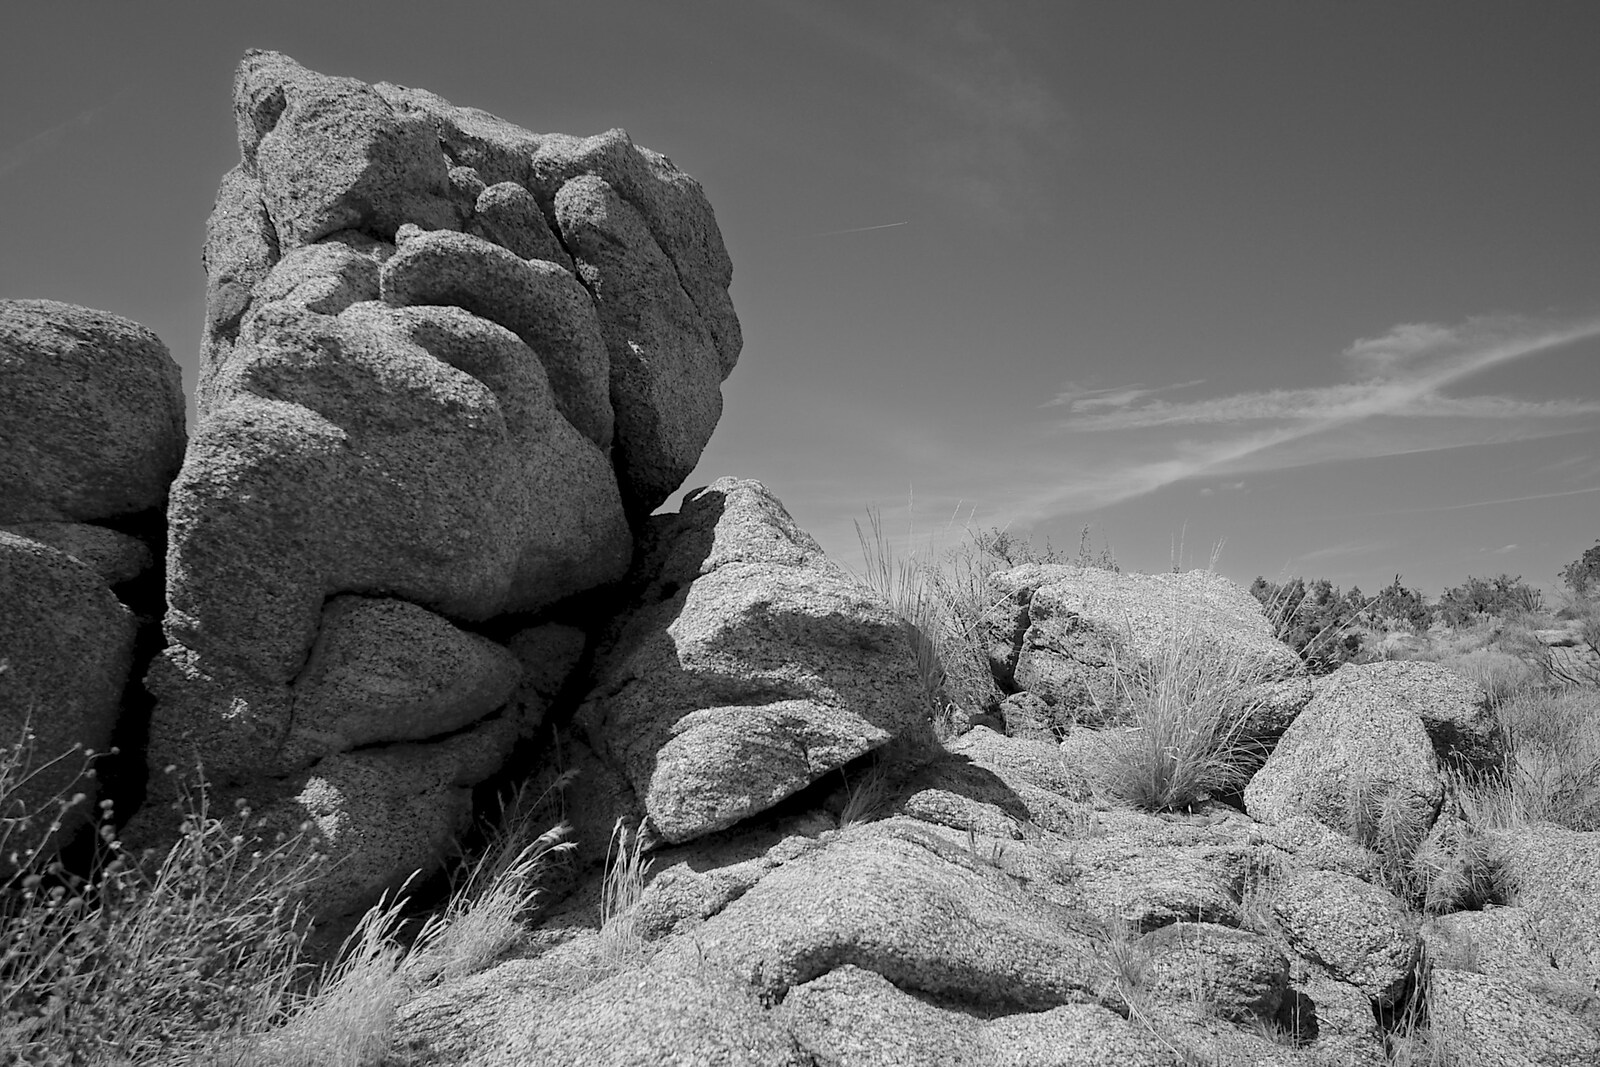 Big rocks from Mojave Desert: San Diego to Joshua Tree and Twentynine Palms, California, US - 5th March 2006